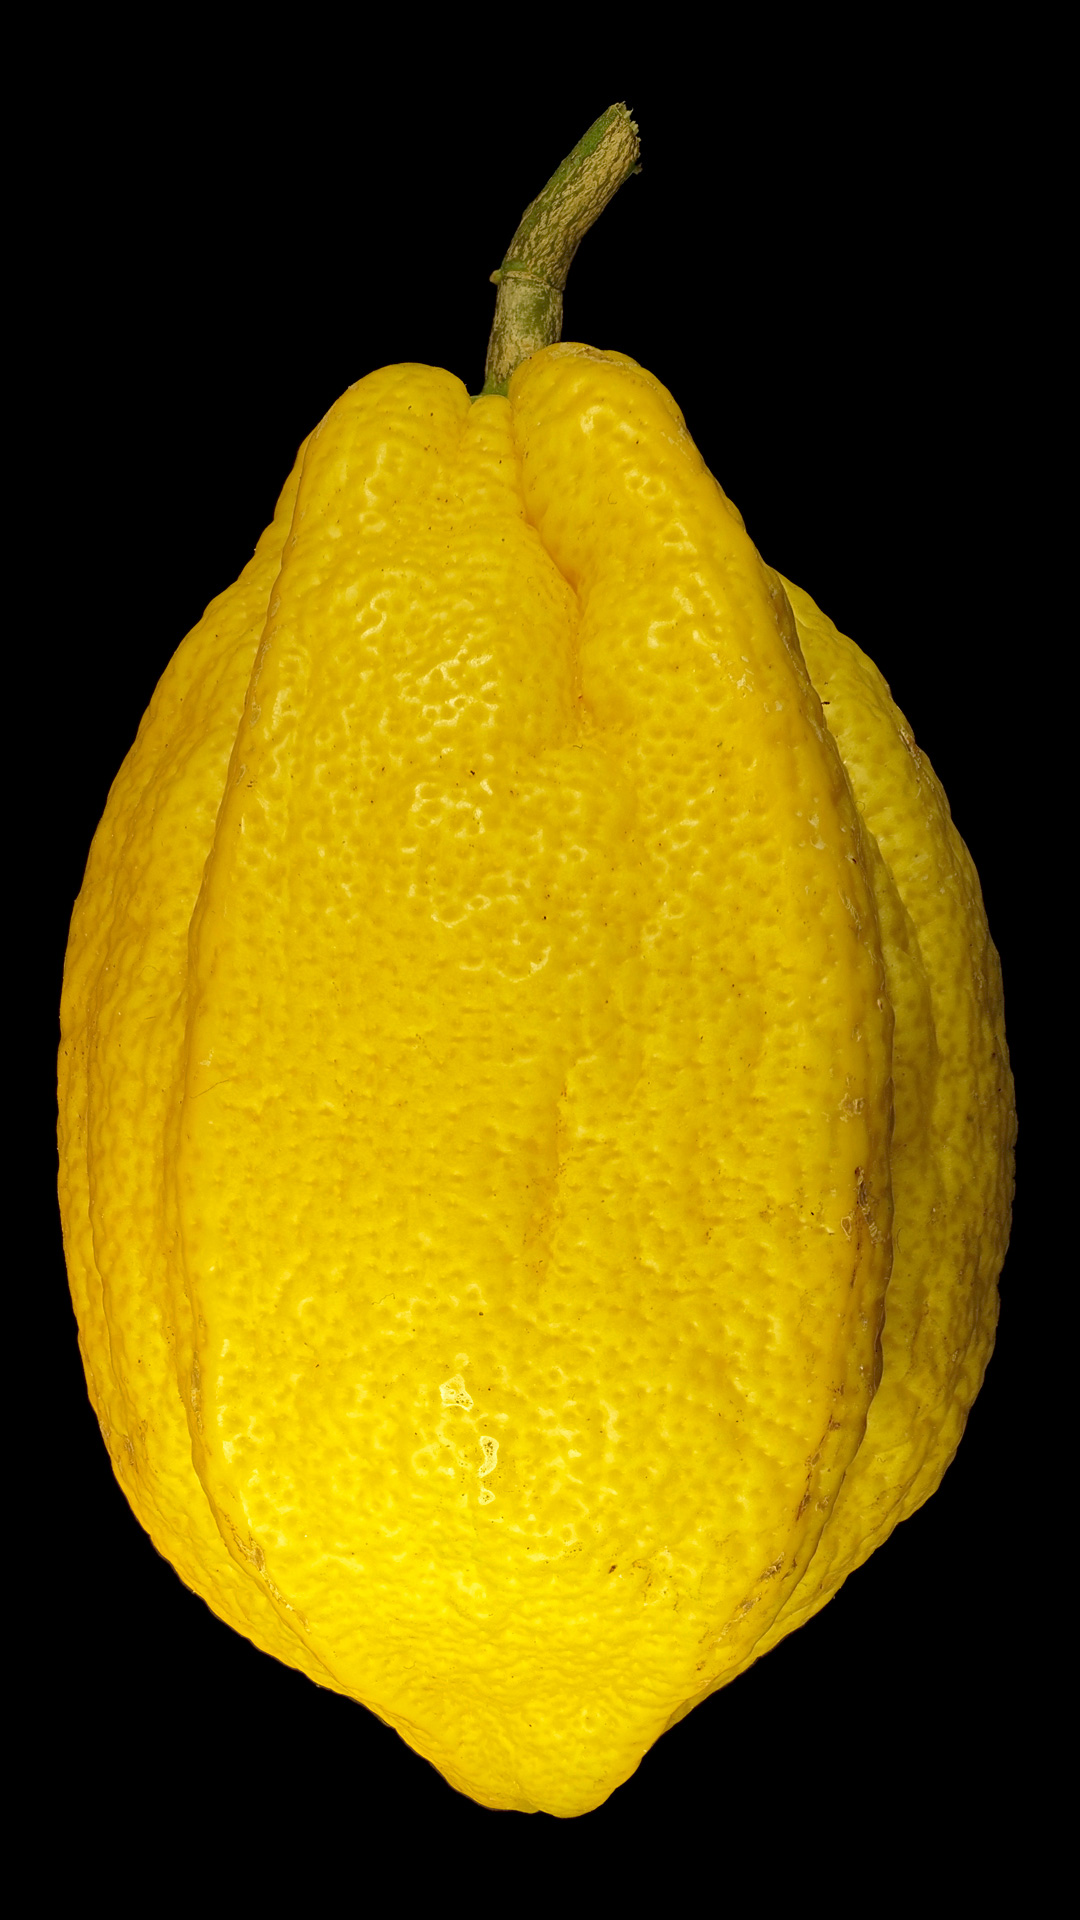 The bizarre lemon: Citrus × lemon ‚Bizzarro‘